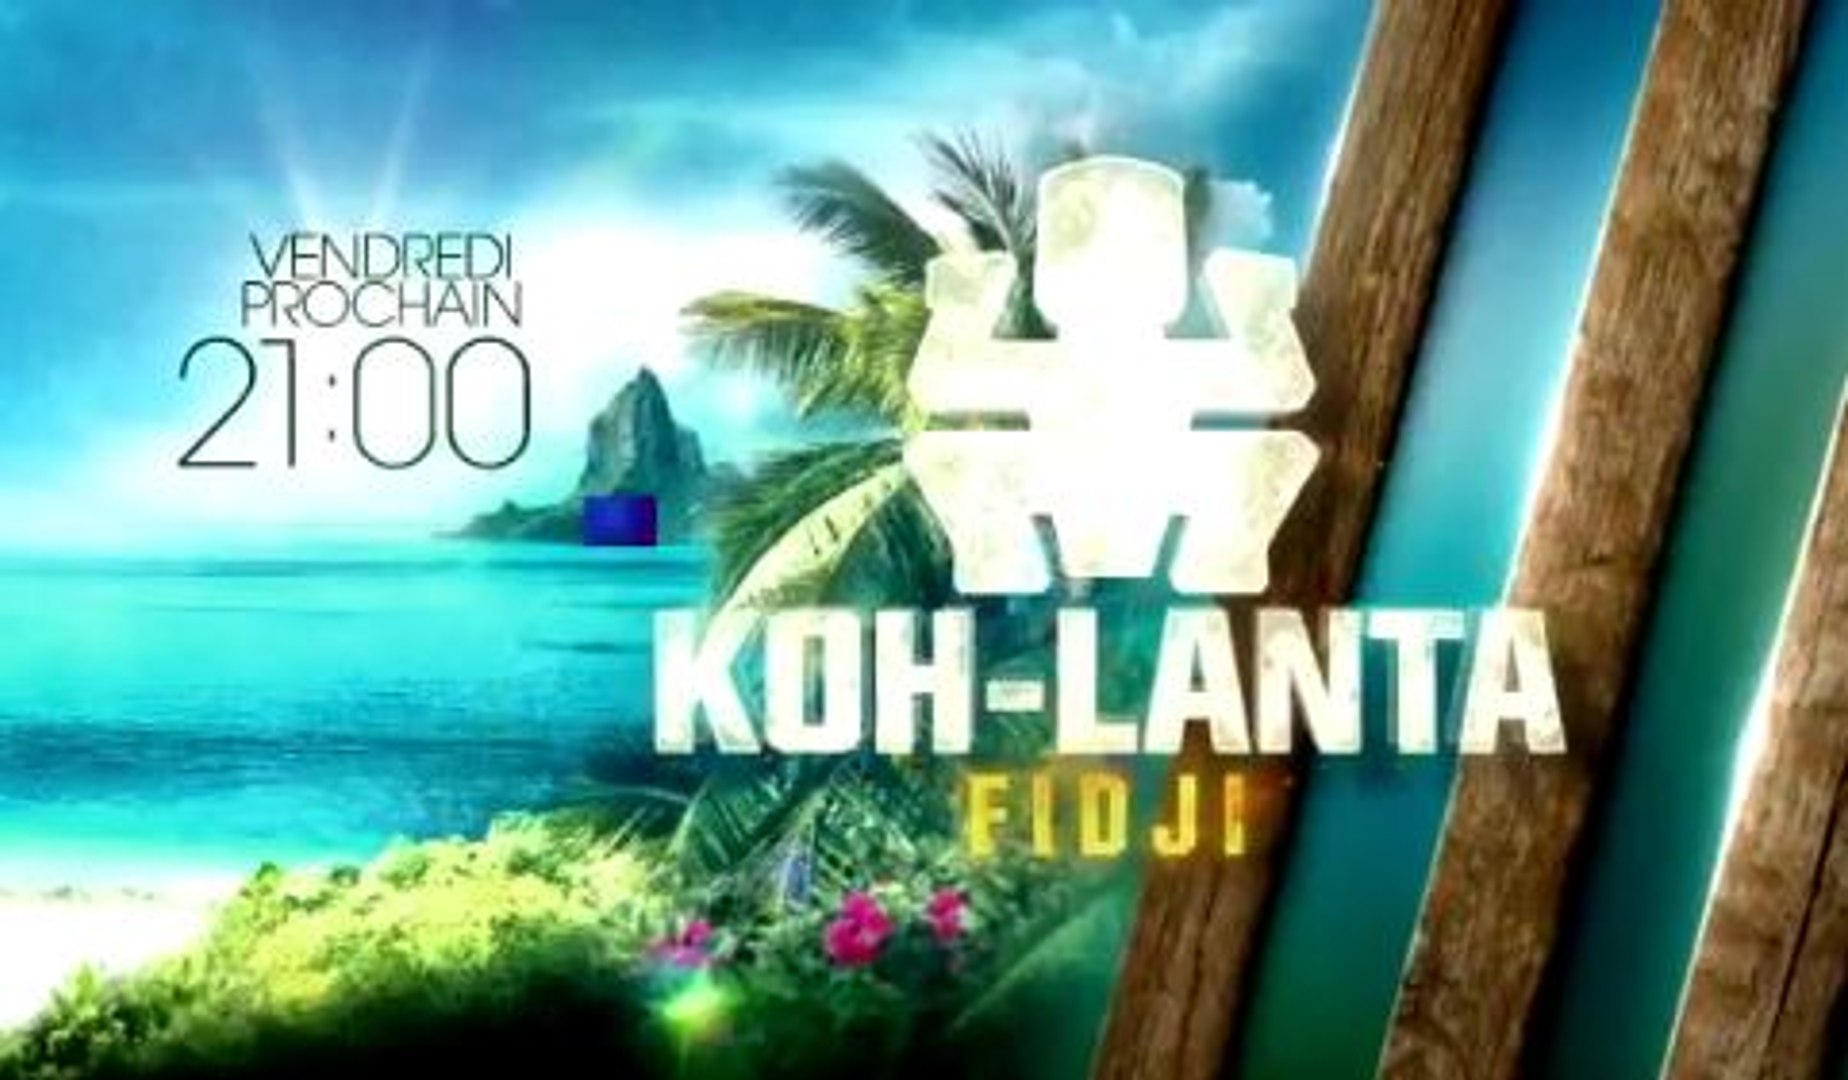 Koh-Lanta Fidji - épisode 1 - 01 09 17 - TF1 - Vidéo Dailymotion